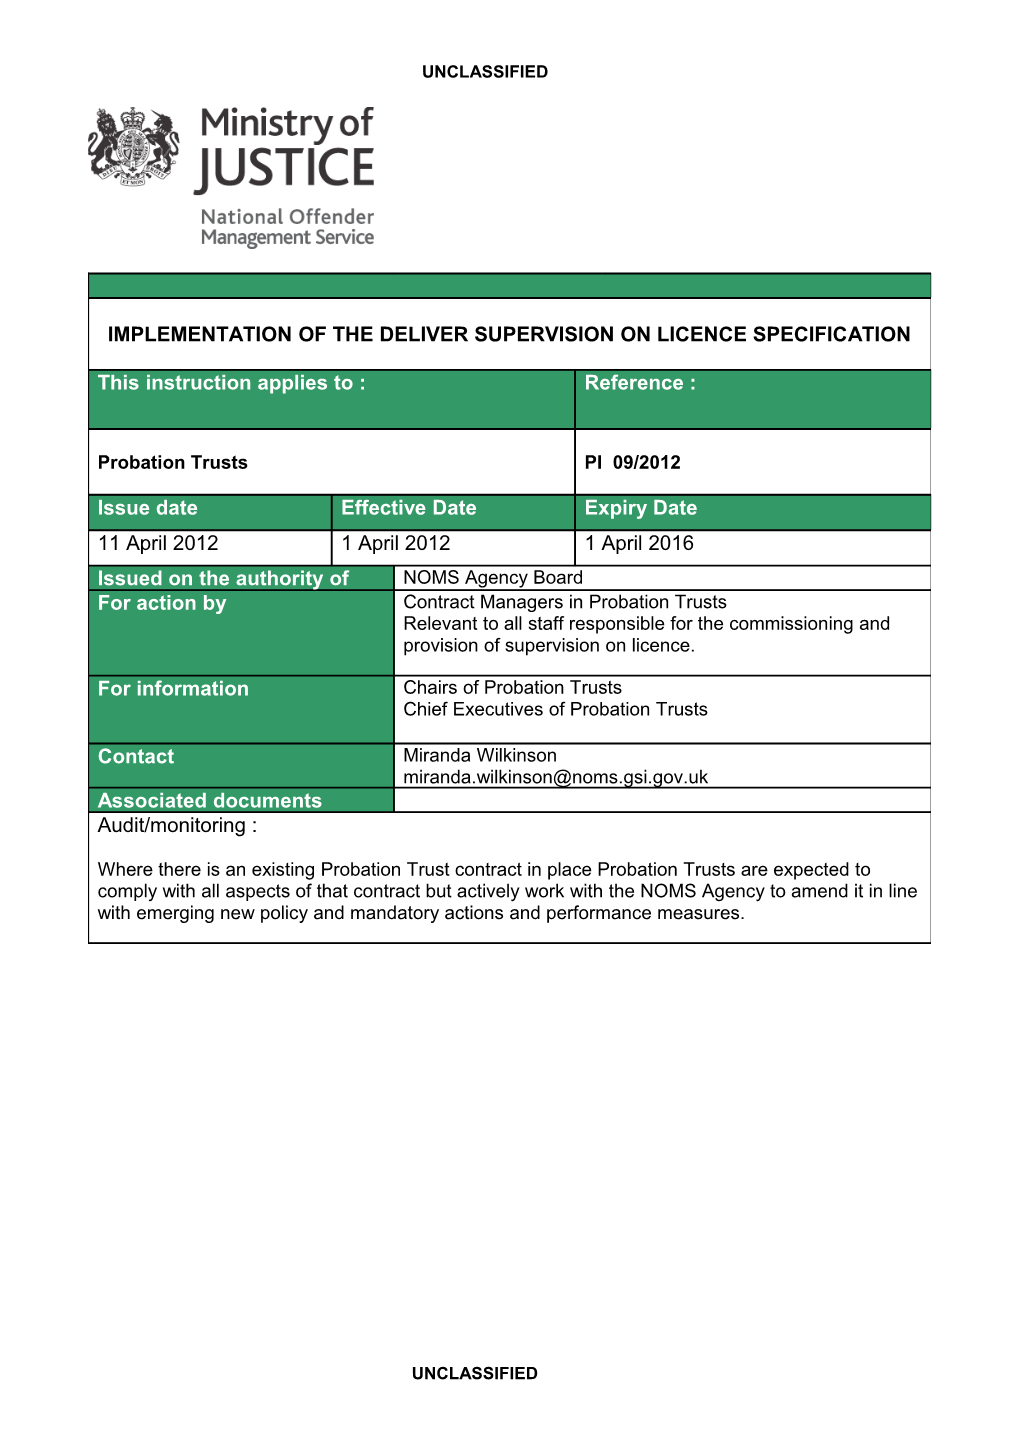 Probation Instruction 09/2012 - Implementation of the Deliver Supervision on Licence